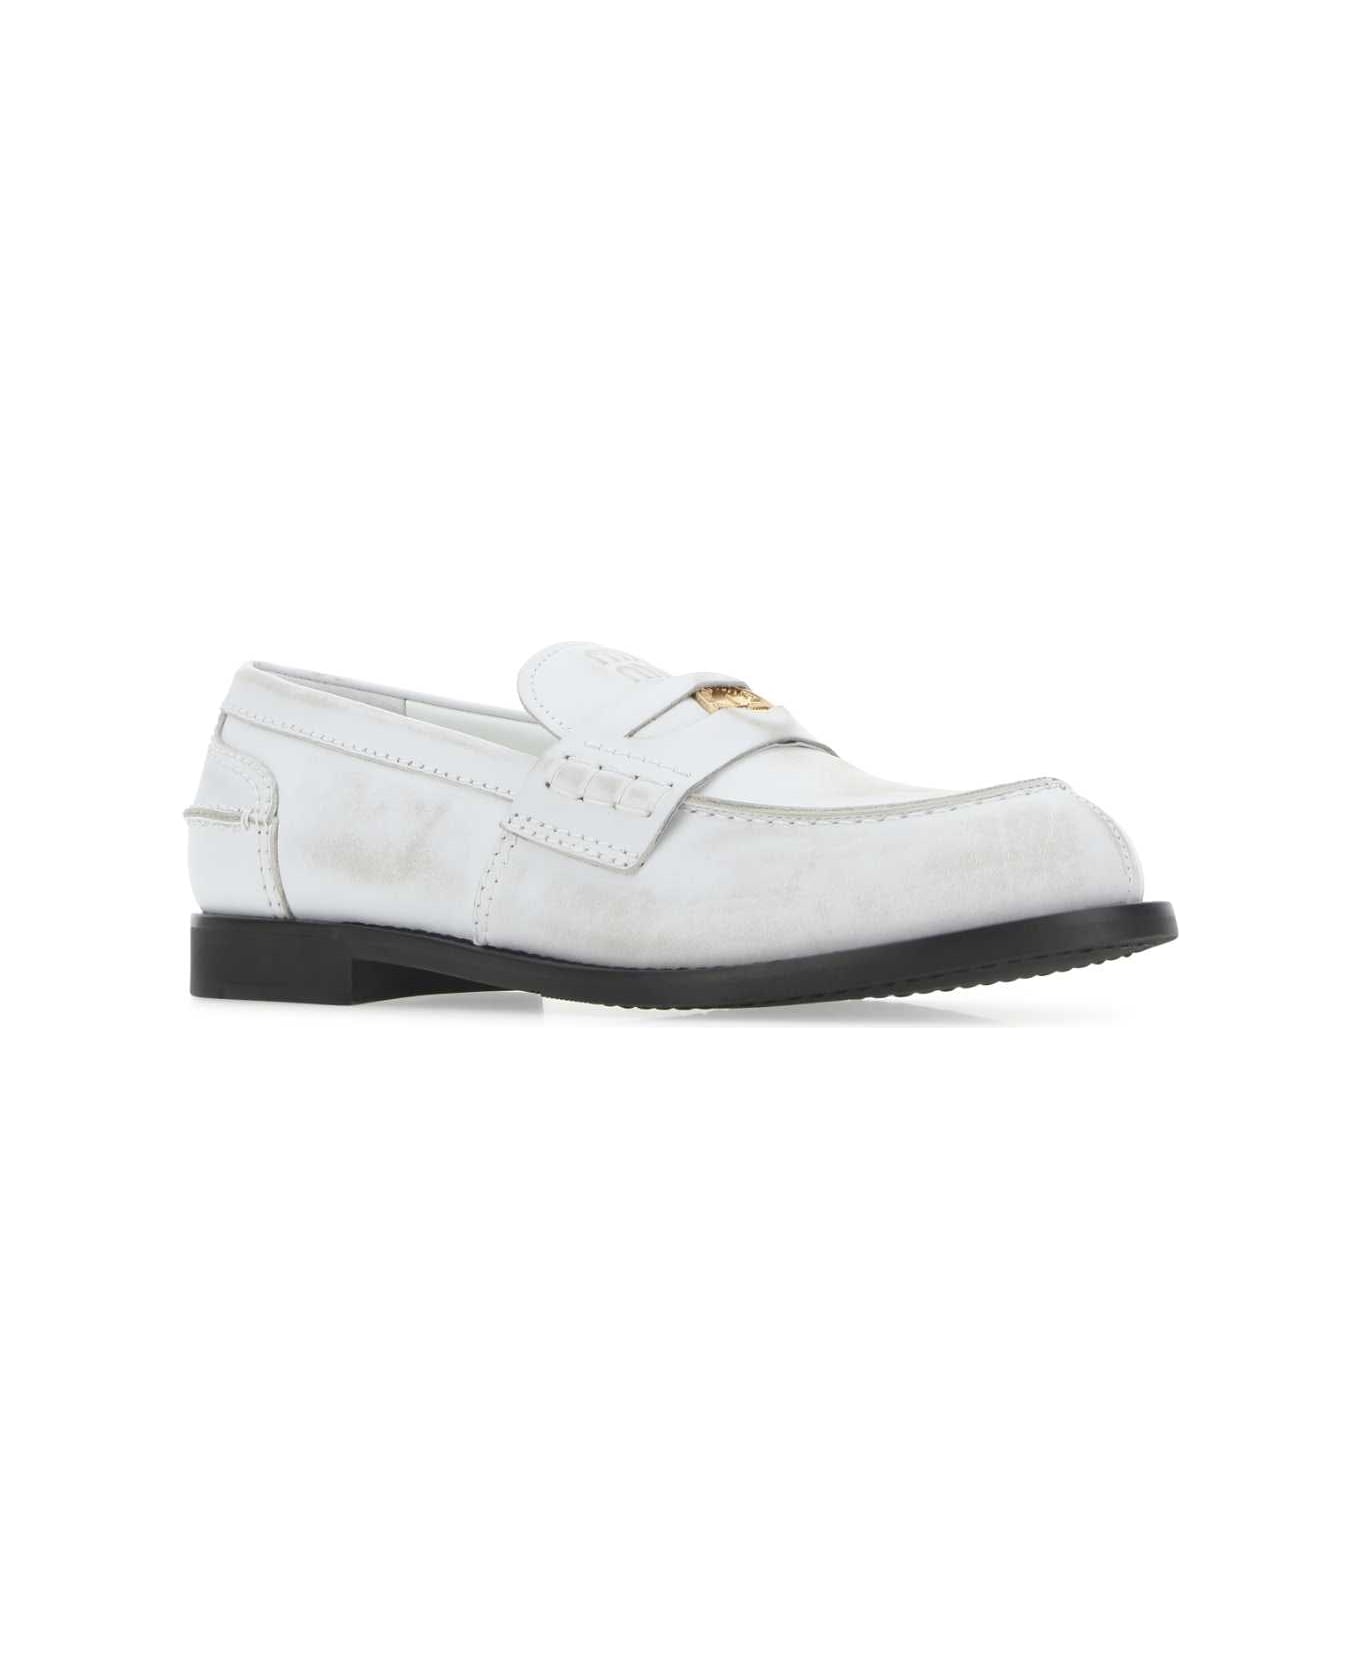 Miu Miu White Leather Loafers - White